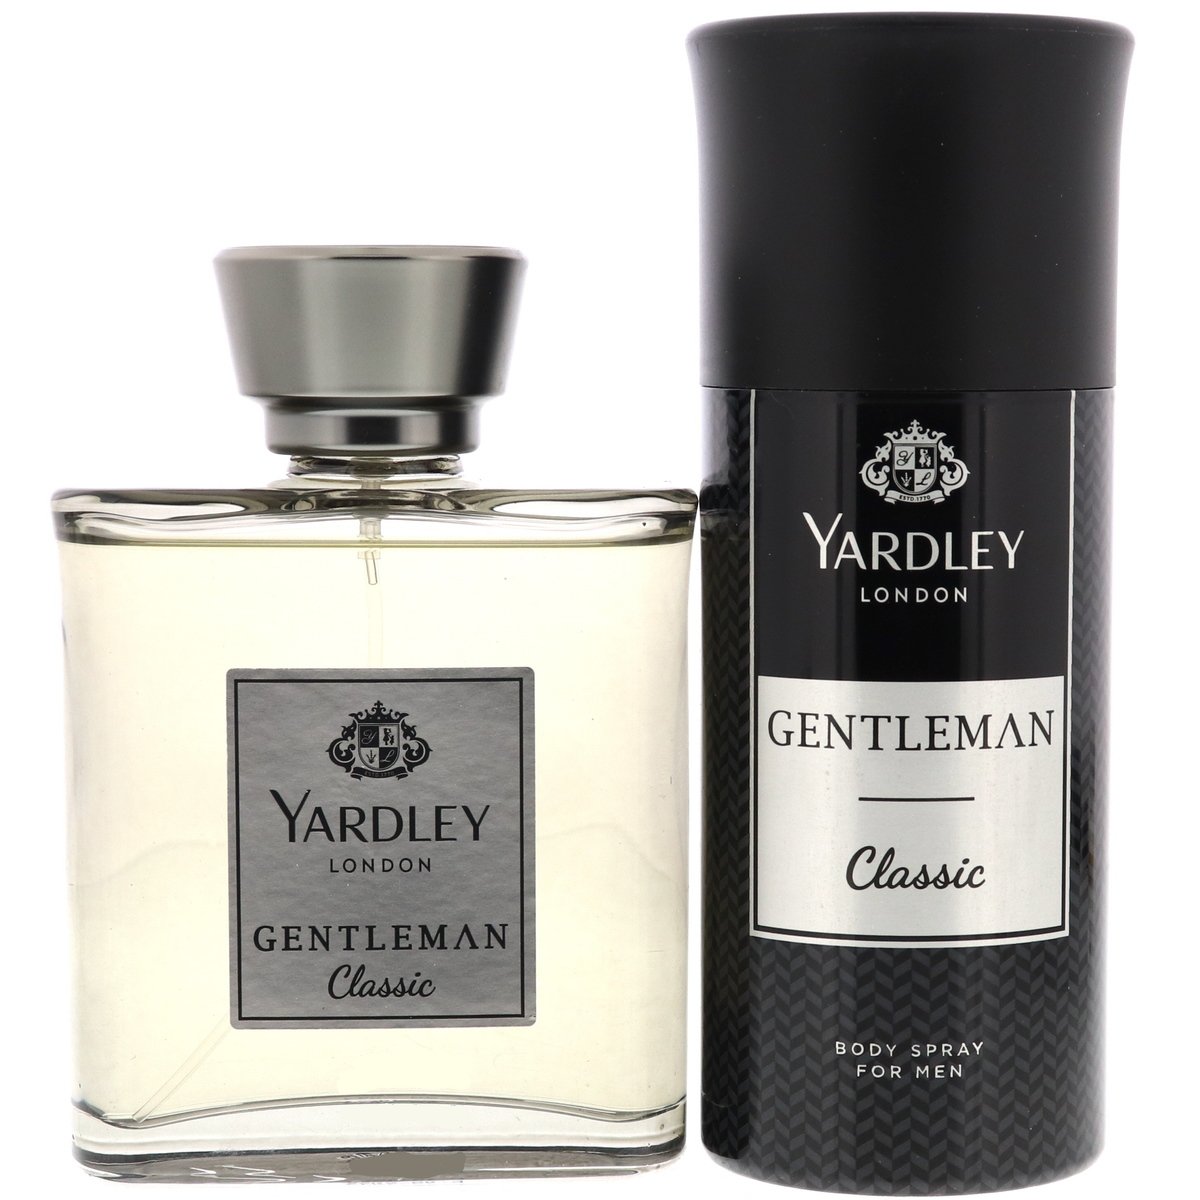 Yardley Gentleman Classic EDT 100ml + Deodorant Body Spray For Men 150ml